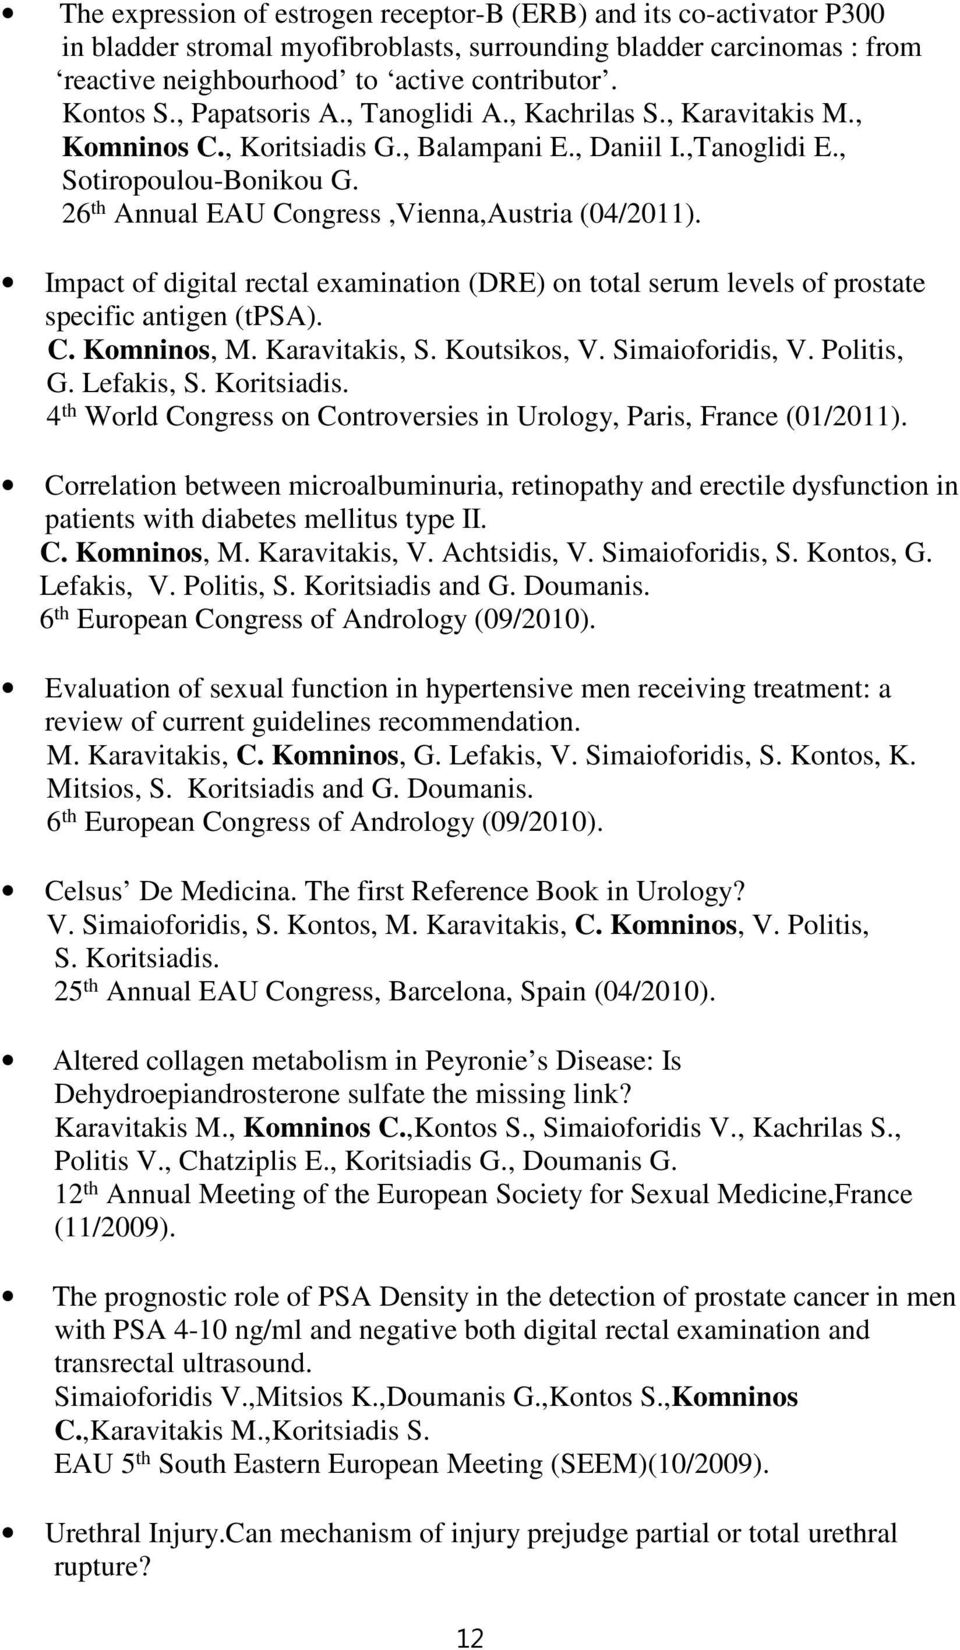 26 th Annual EAU Congress,Vienna,Austria (04/2011). Impact of digital rectal examination (DRE) on total serum levels of prostate specific antigen (tpsa). C. Komninos, M. Karavitakis, S. Koutsikos, V.